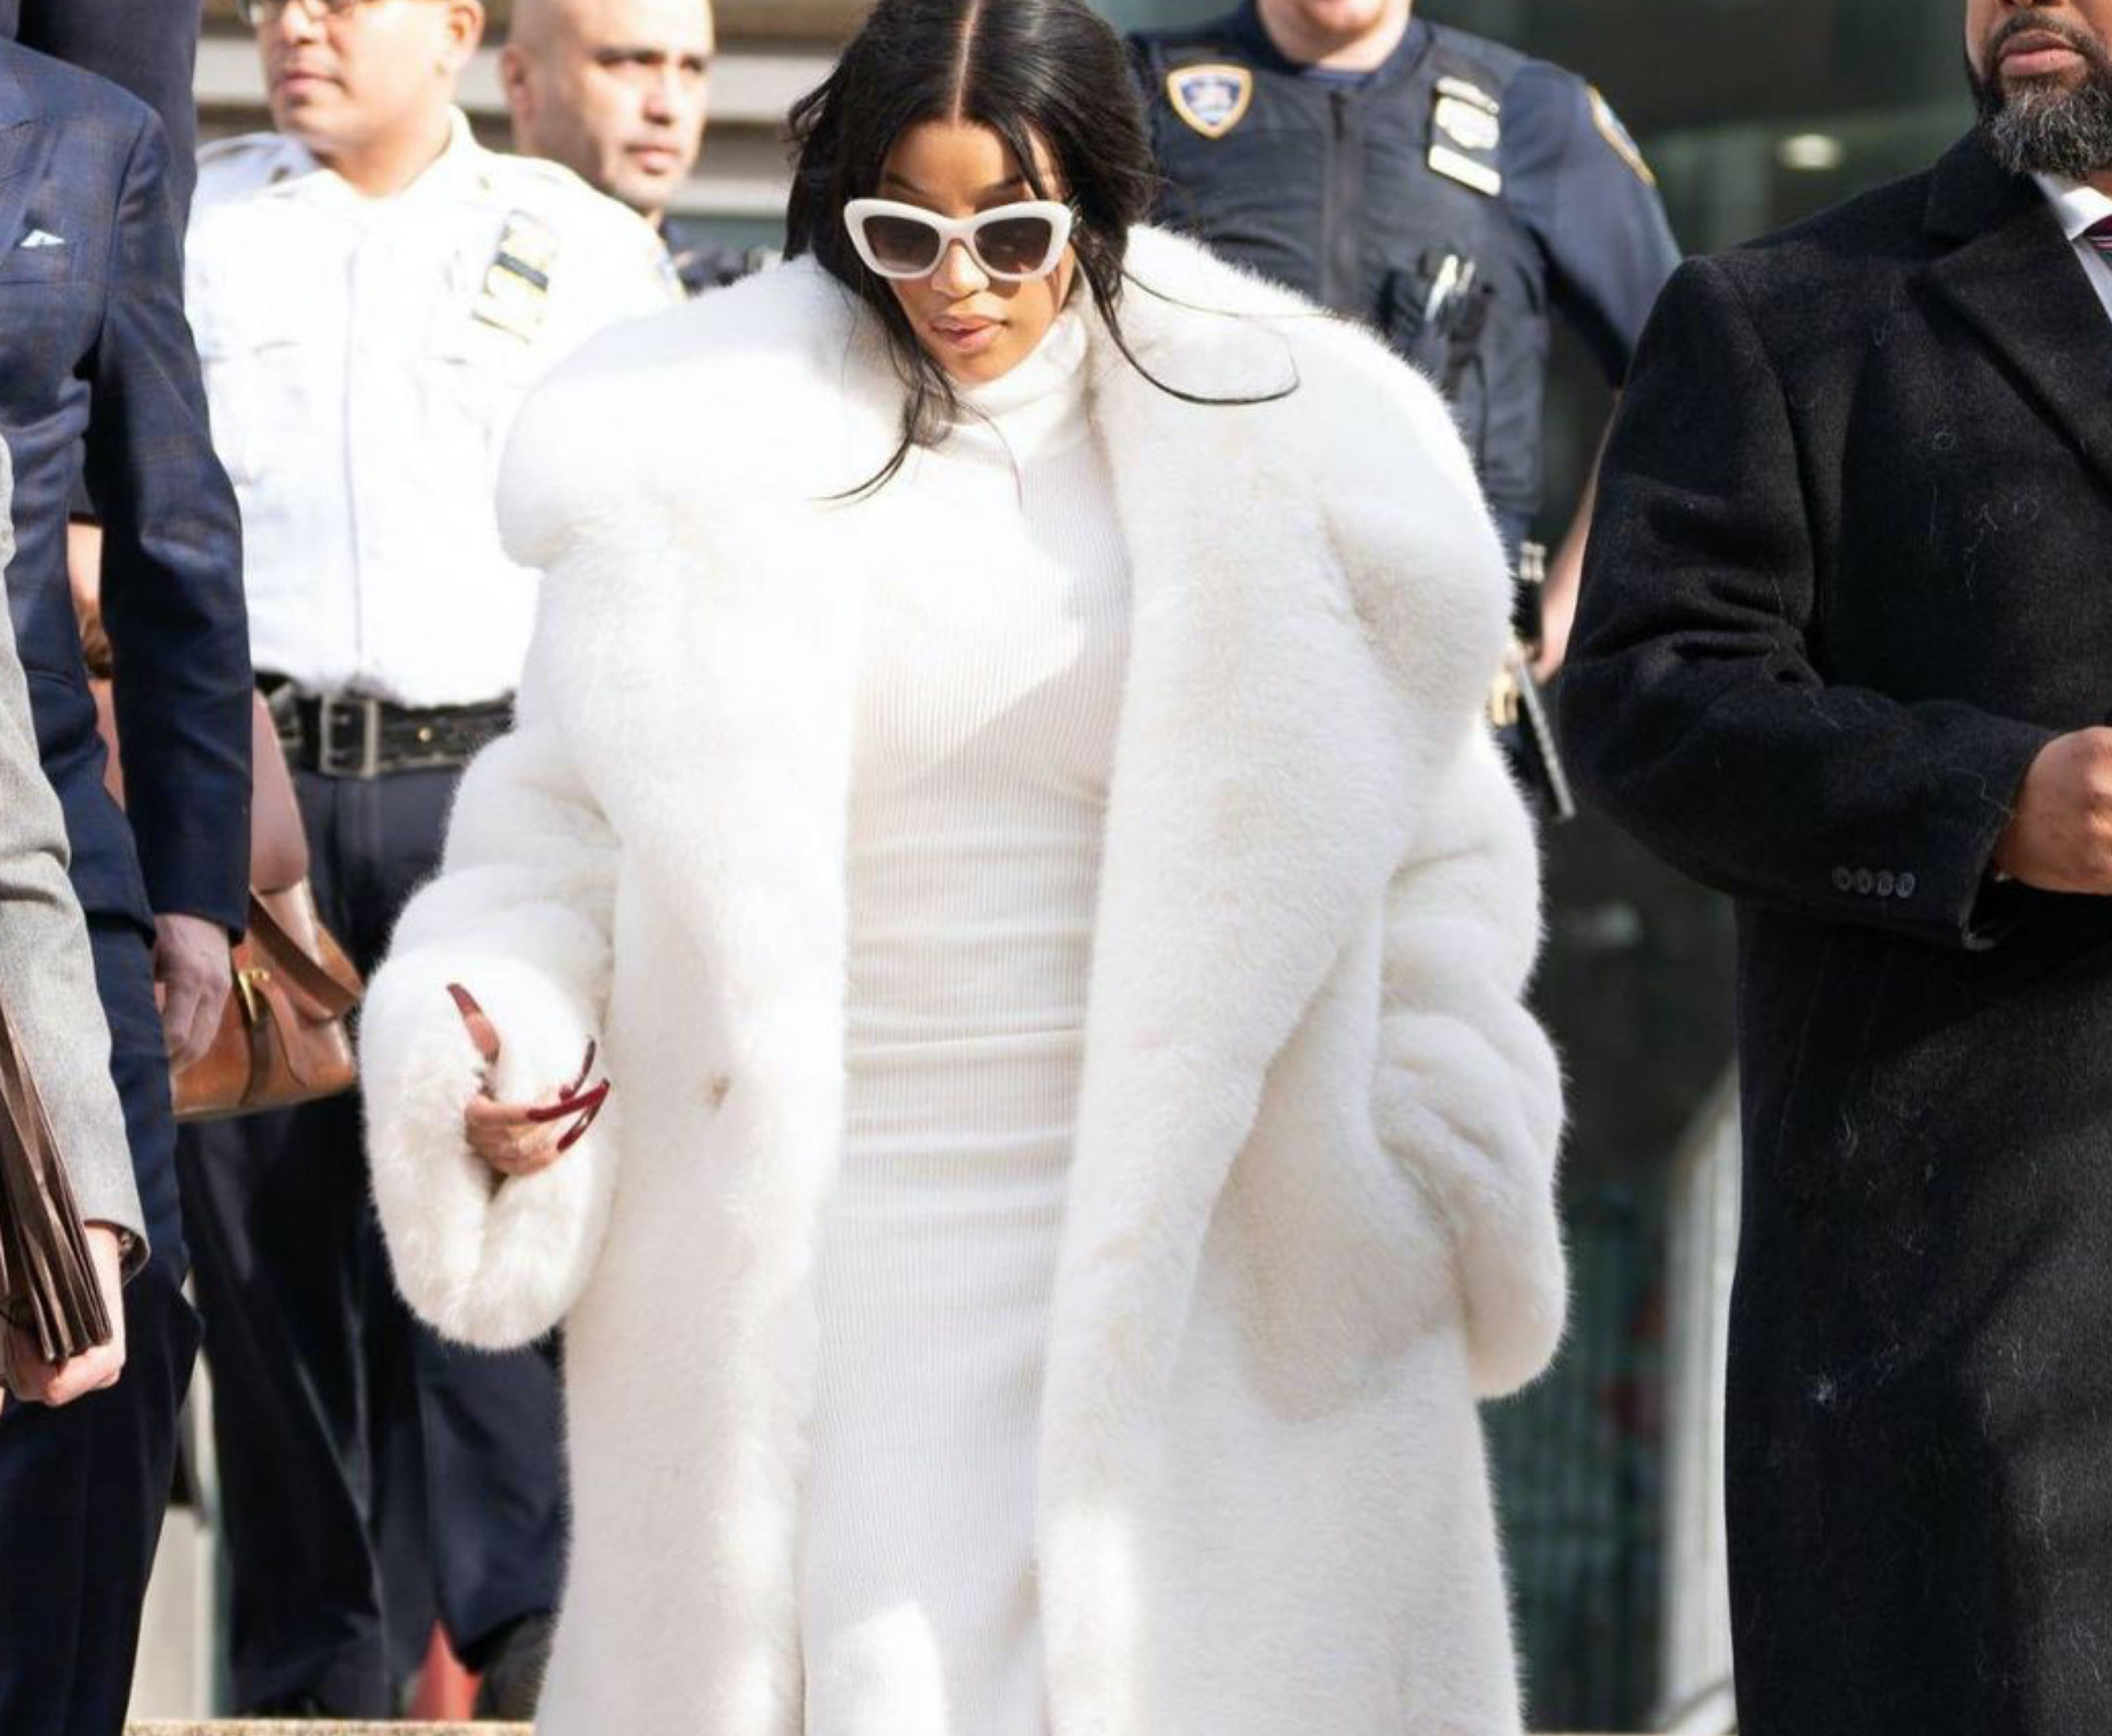 Cardi B dons extravagant fur coat while strolling through New York City.